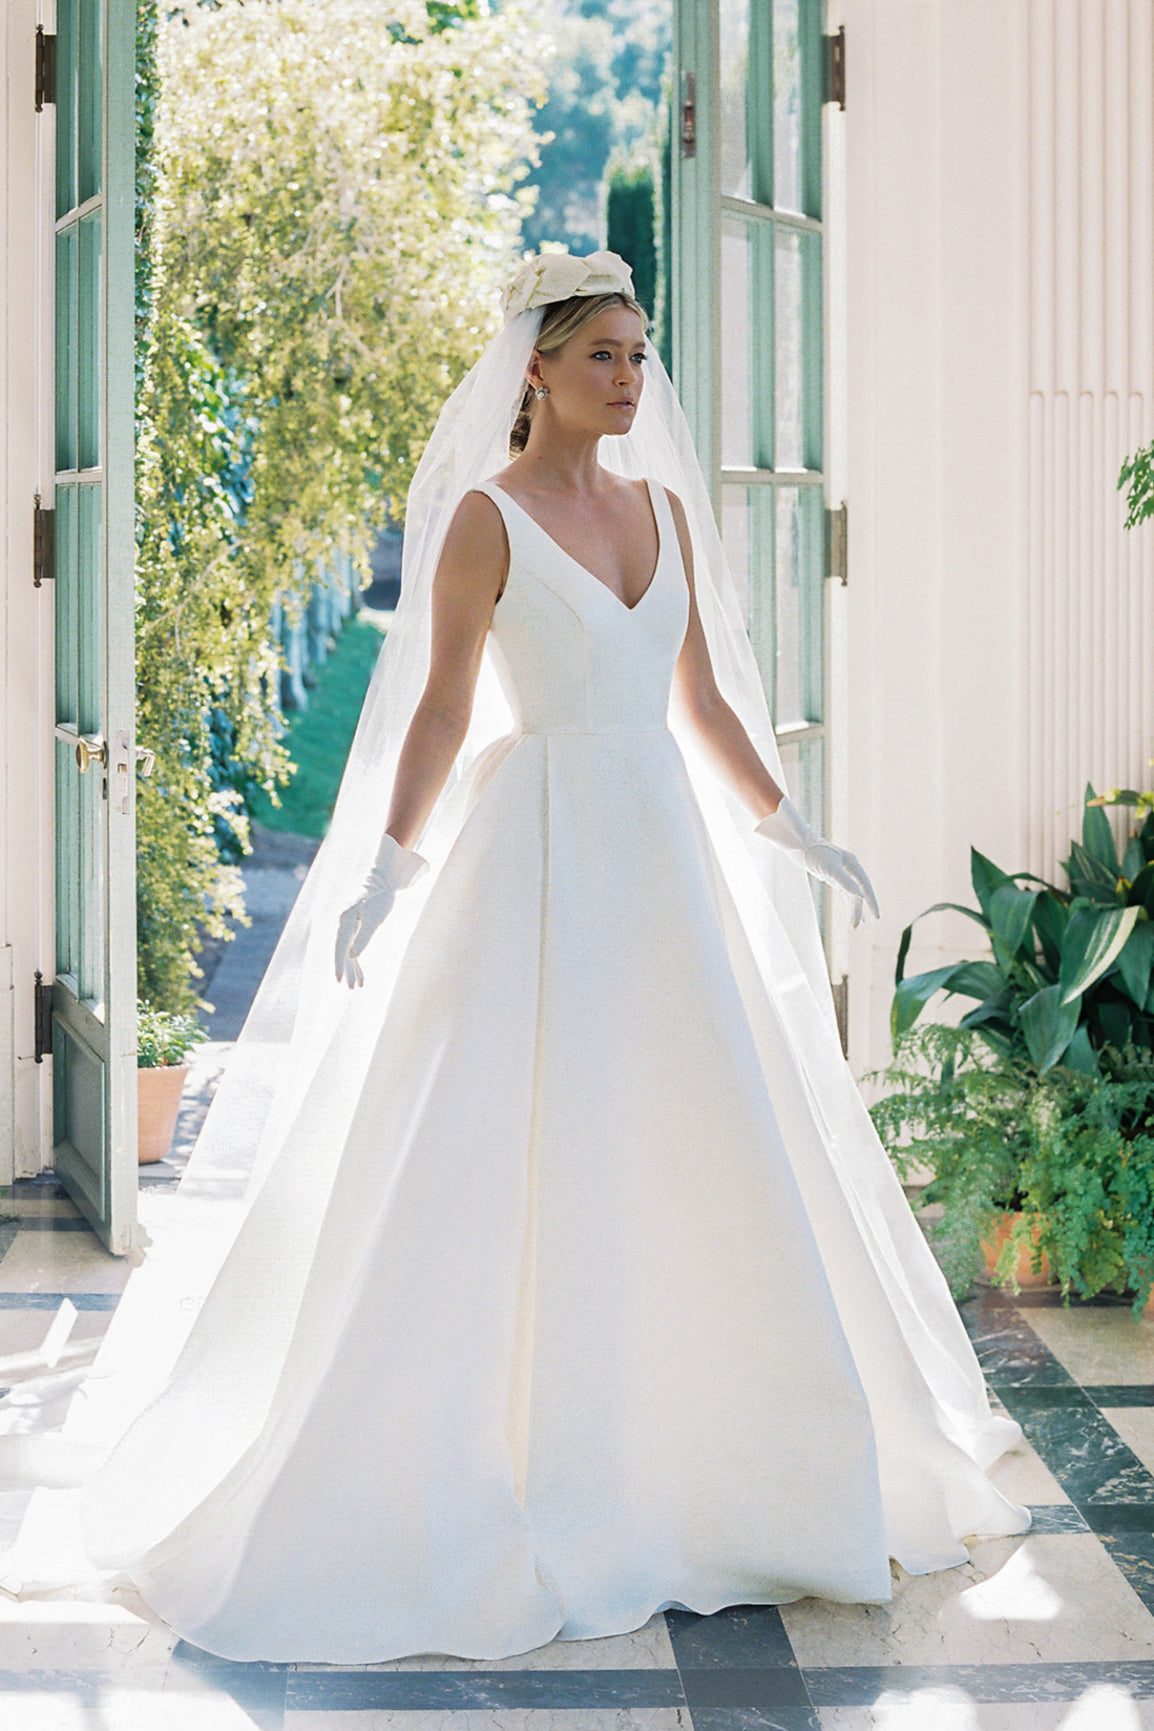 OSTTY - Luxury White Wedding Dress Long Sleeve Full Beading Ball Gown  $1,999.99